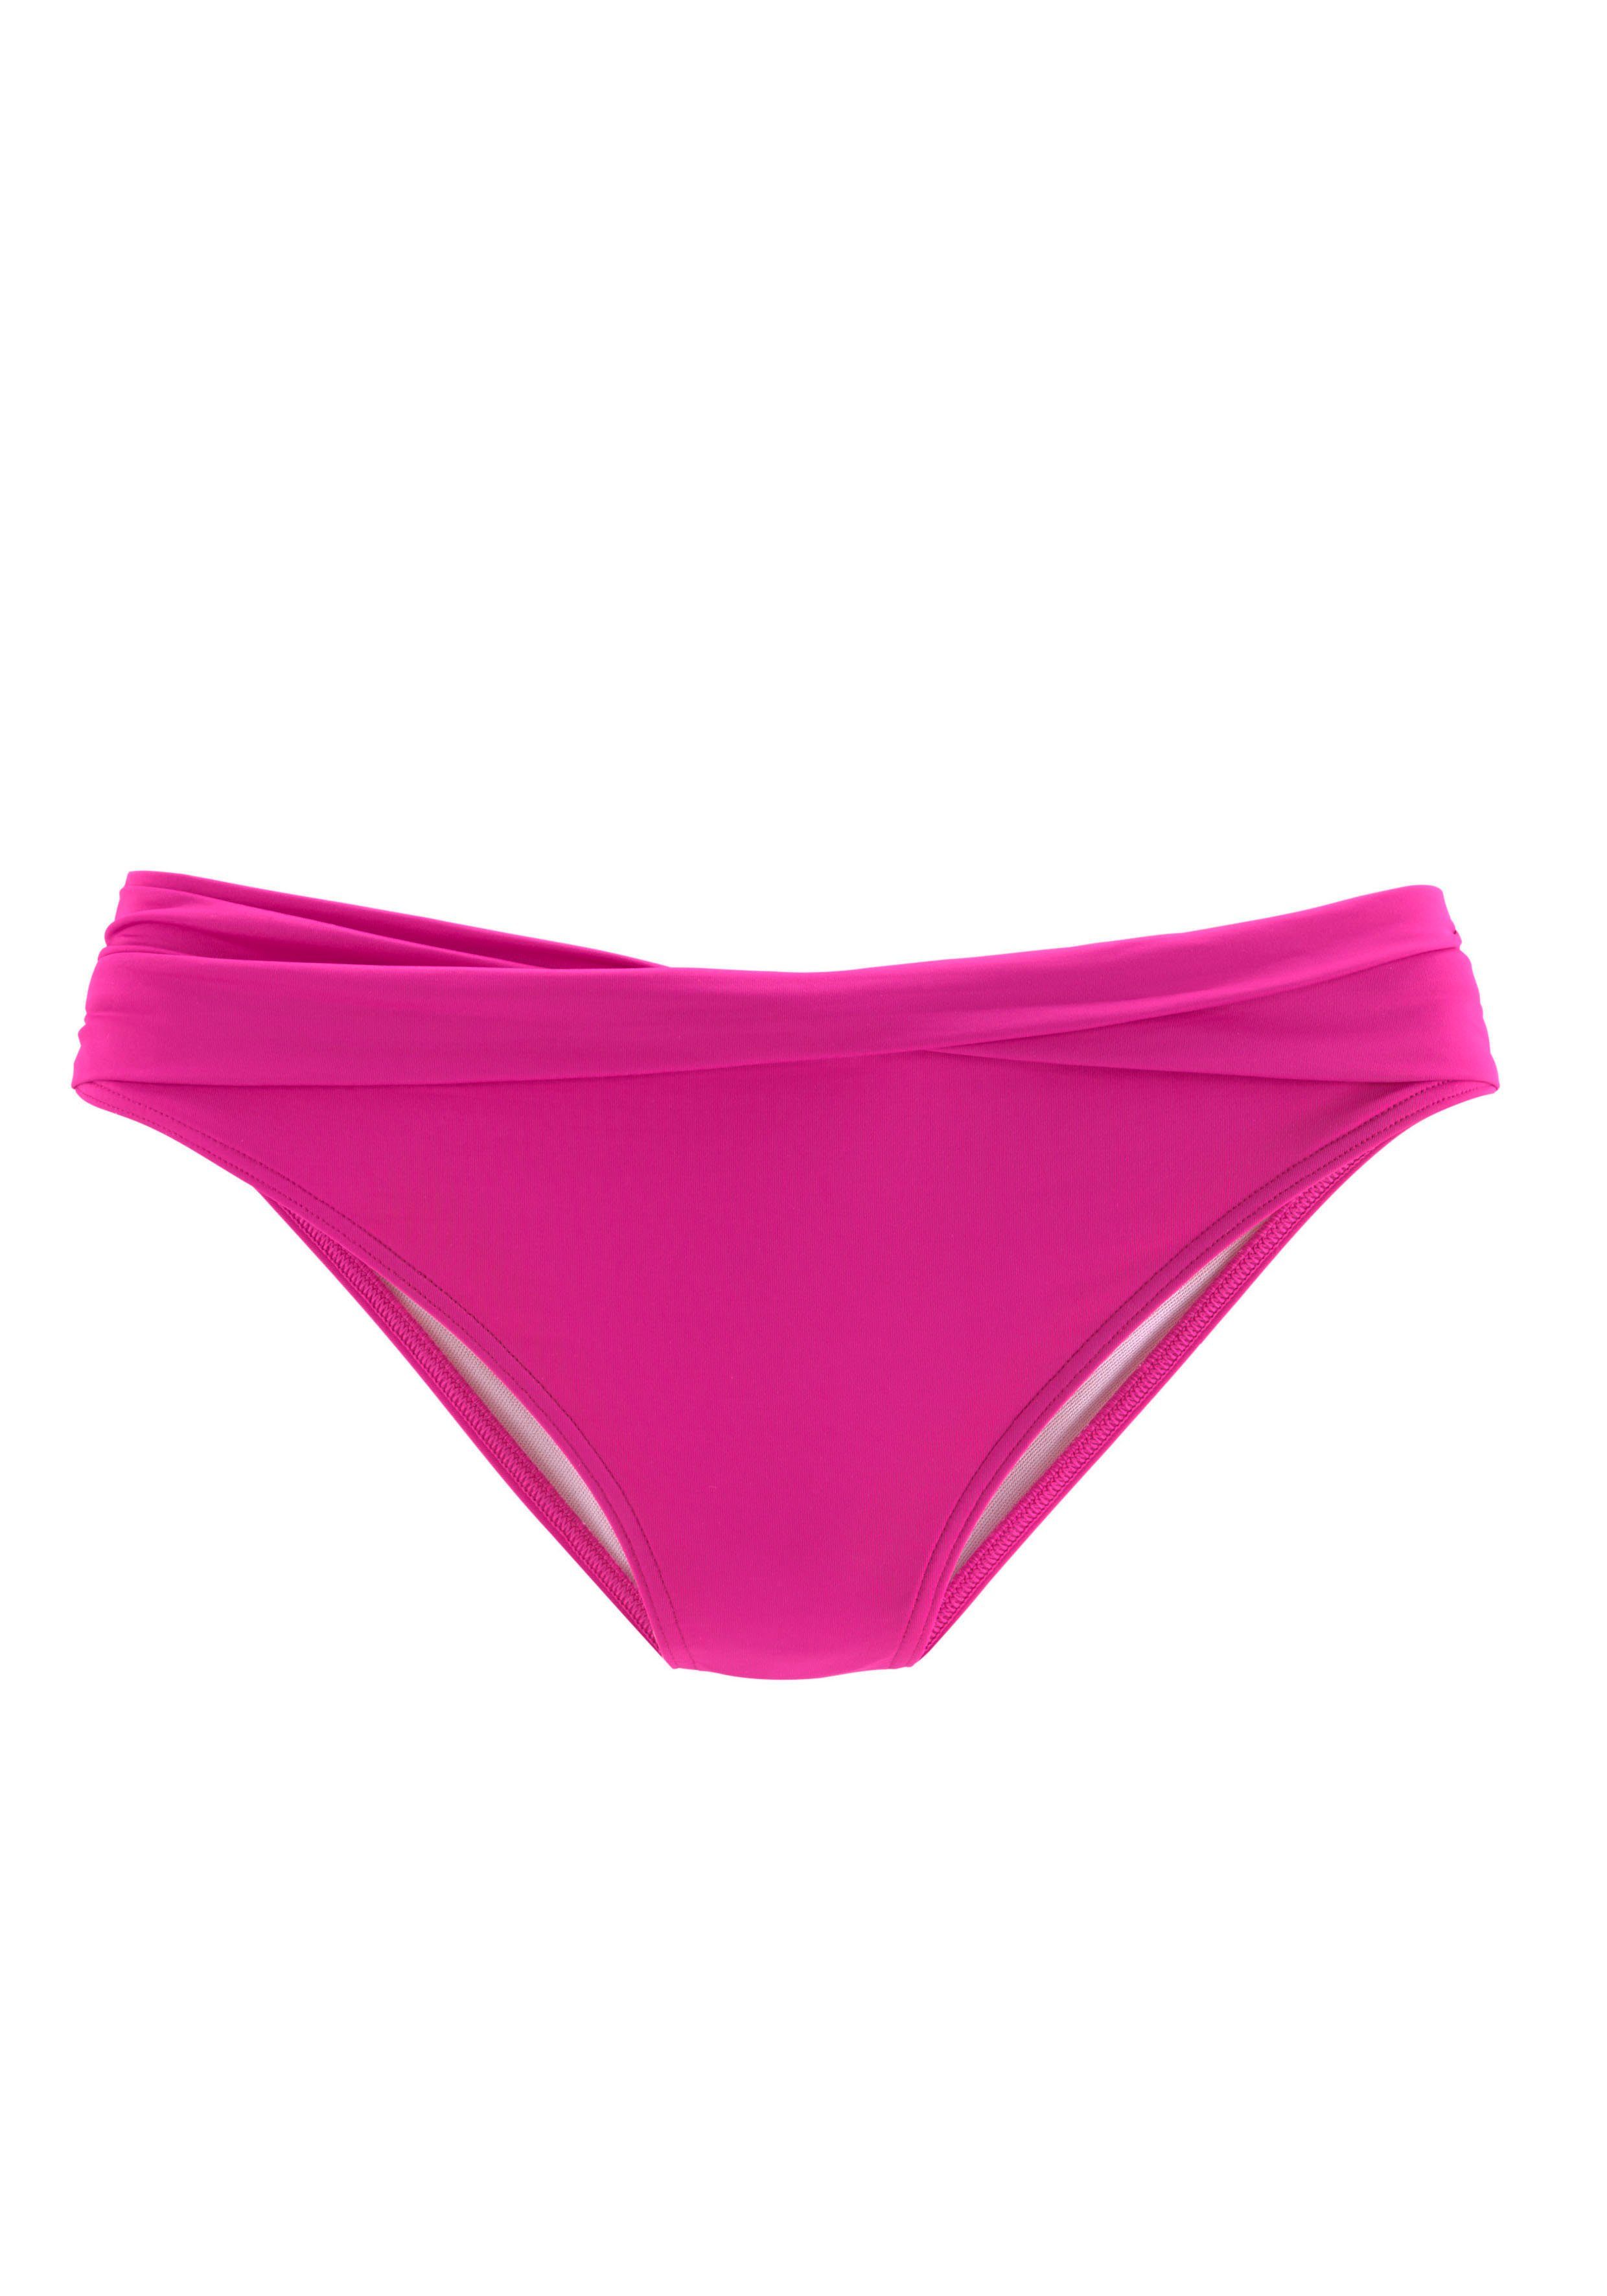 s.oliver red label beachwear bikinibroekje spain met gedraaide boord roze